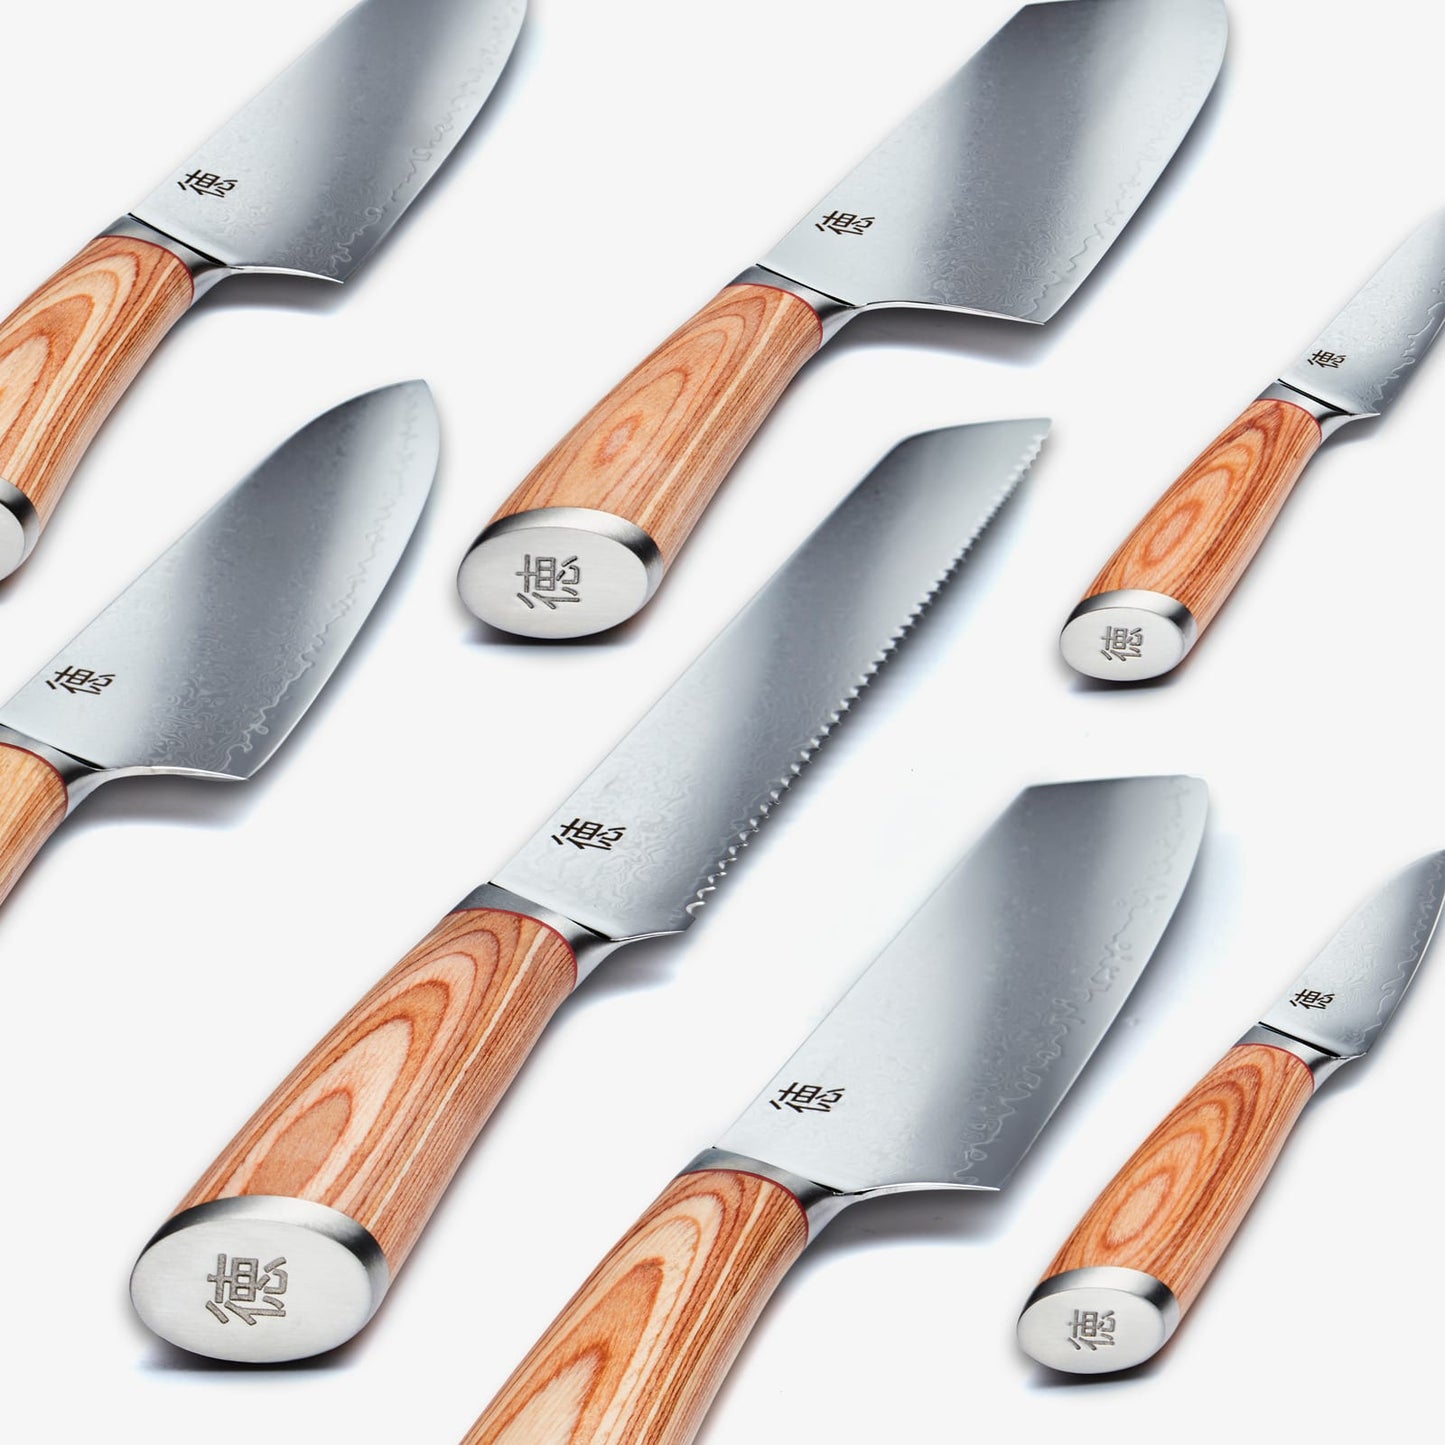 Haruta (はる た た) 67 capa aus 10 cuchillos de cocina de acero damasco